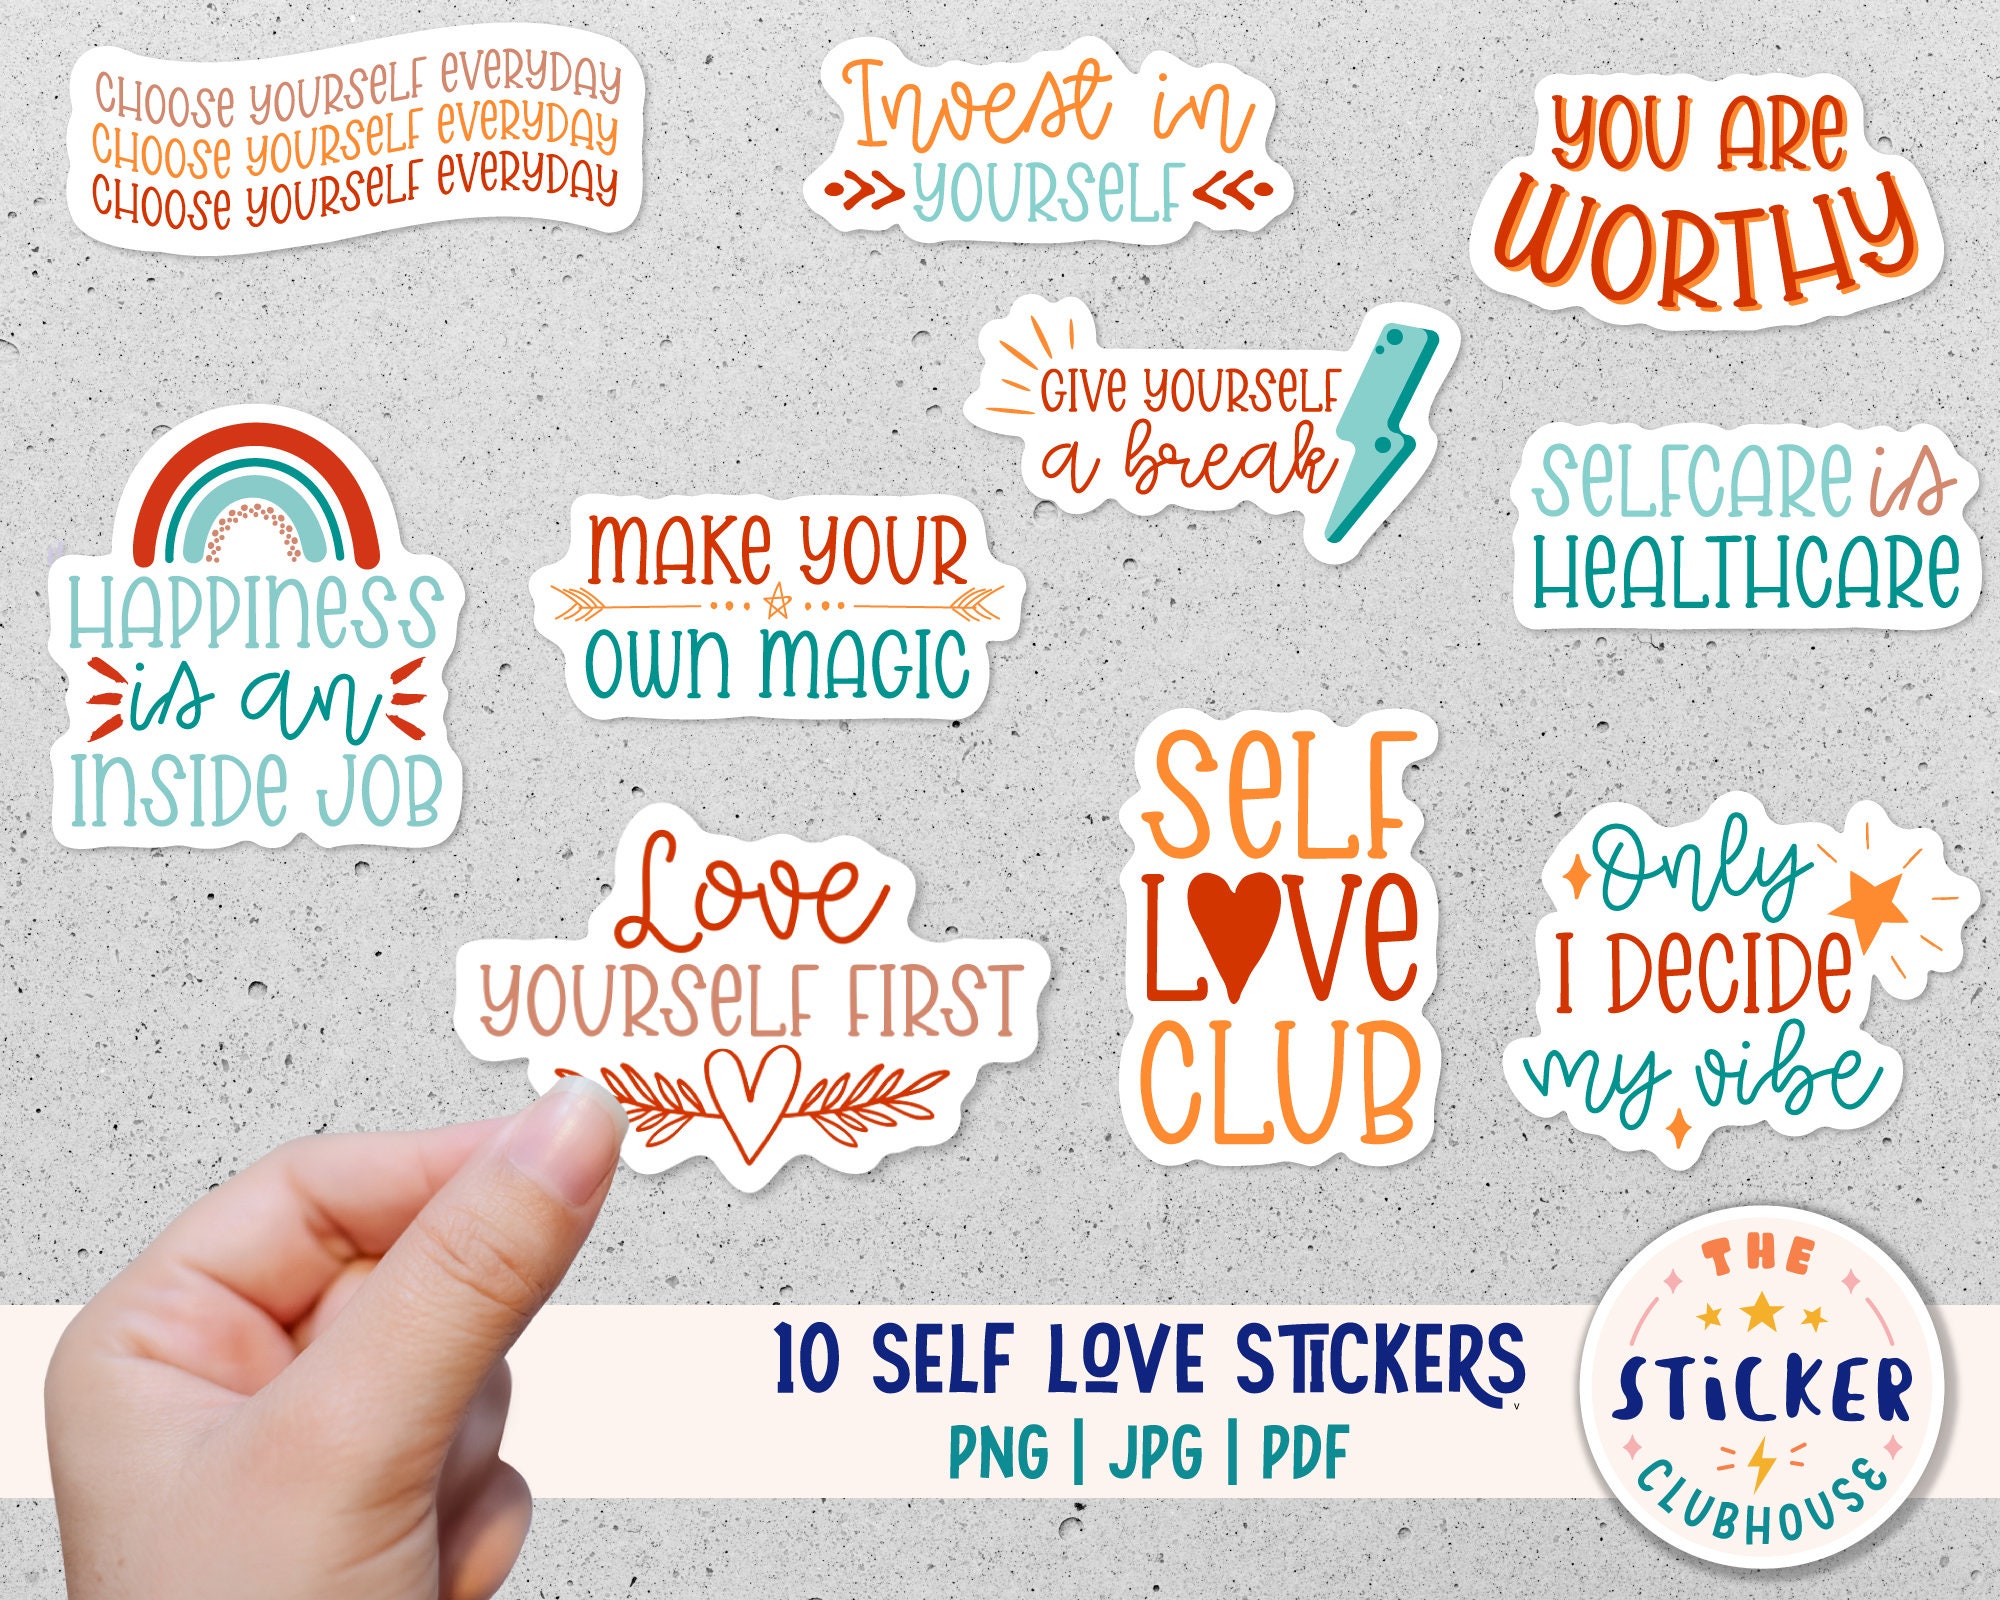 Mental Health Stickers Motivational Inspirational Positivity Wellness Set  of 11